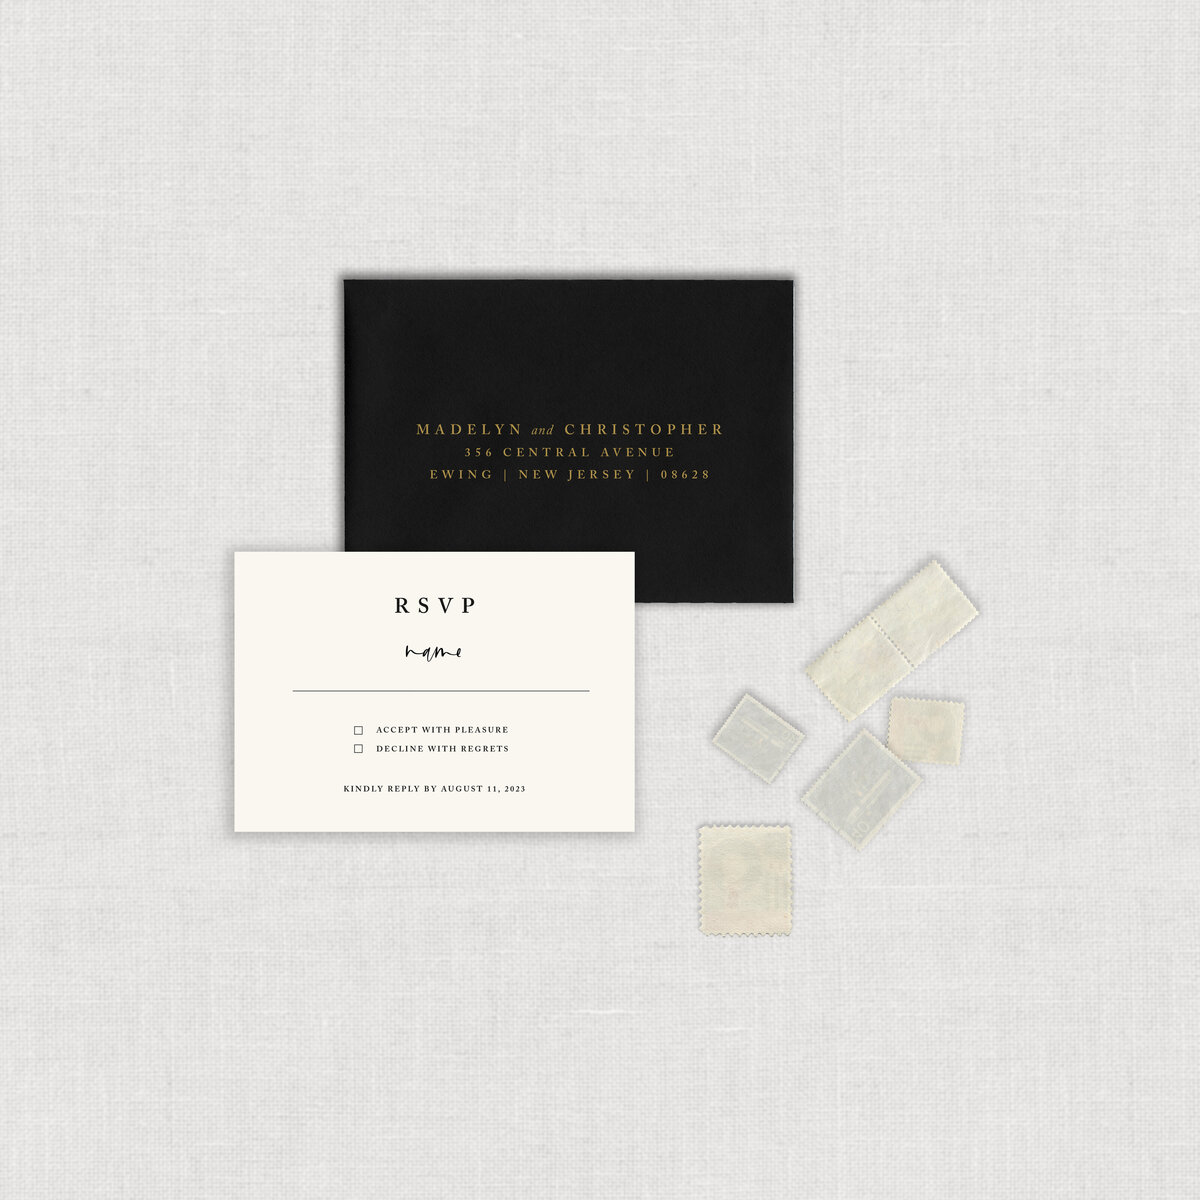 Wedding invite RSVP card with RSVP Envelope